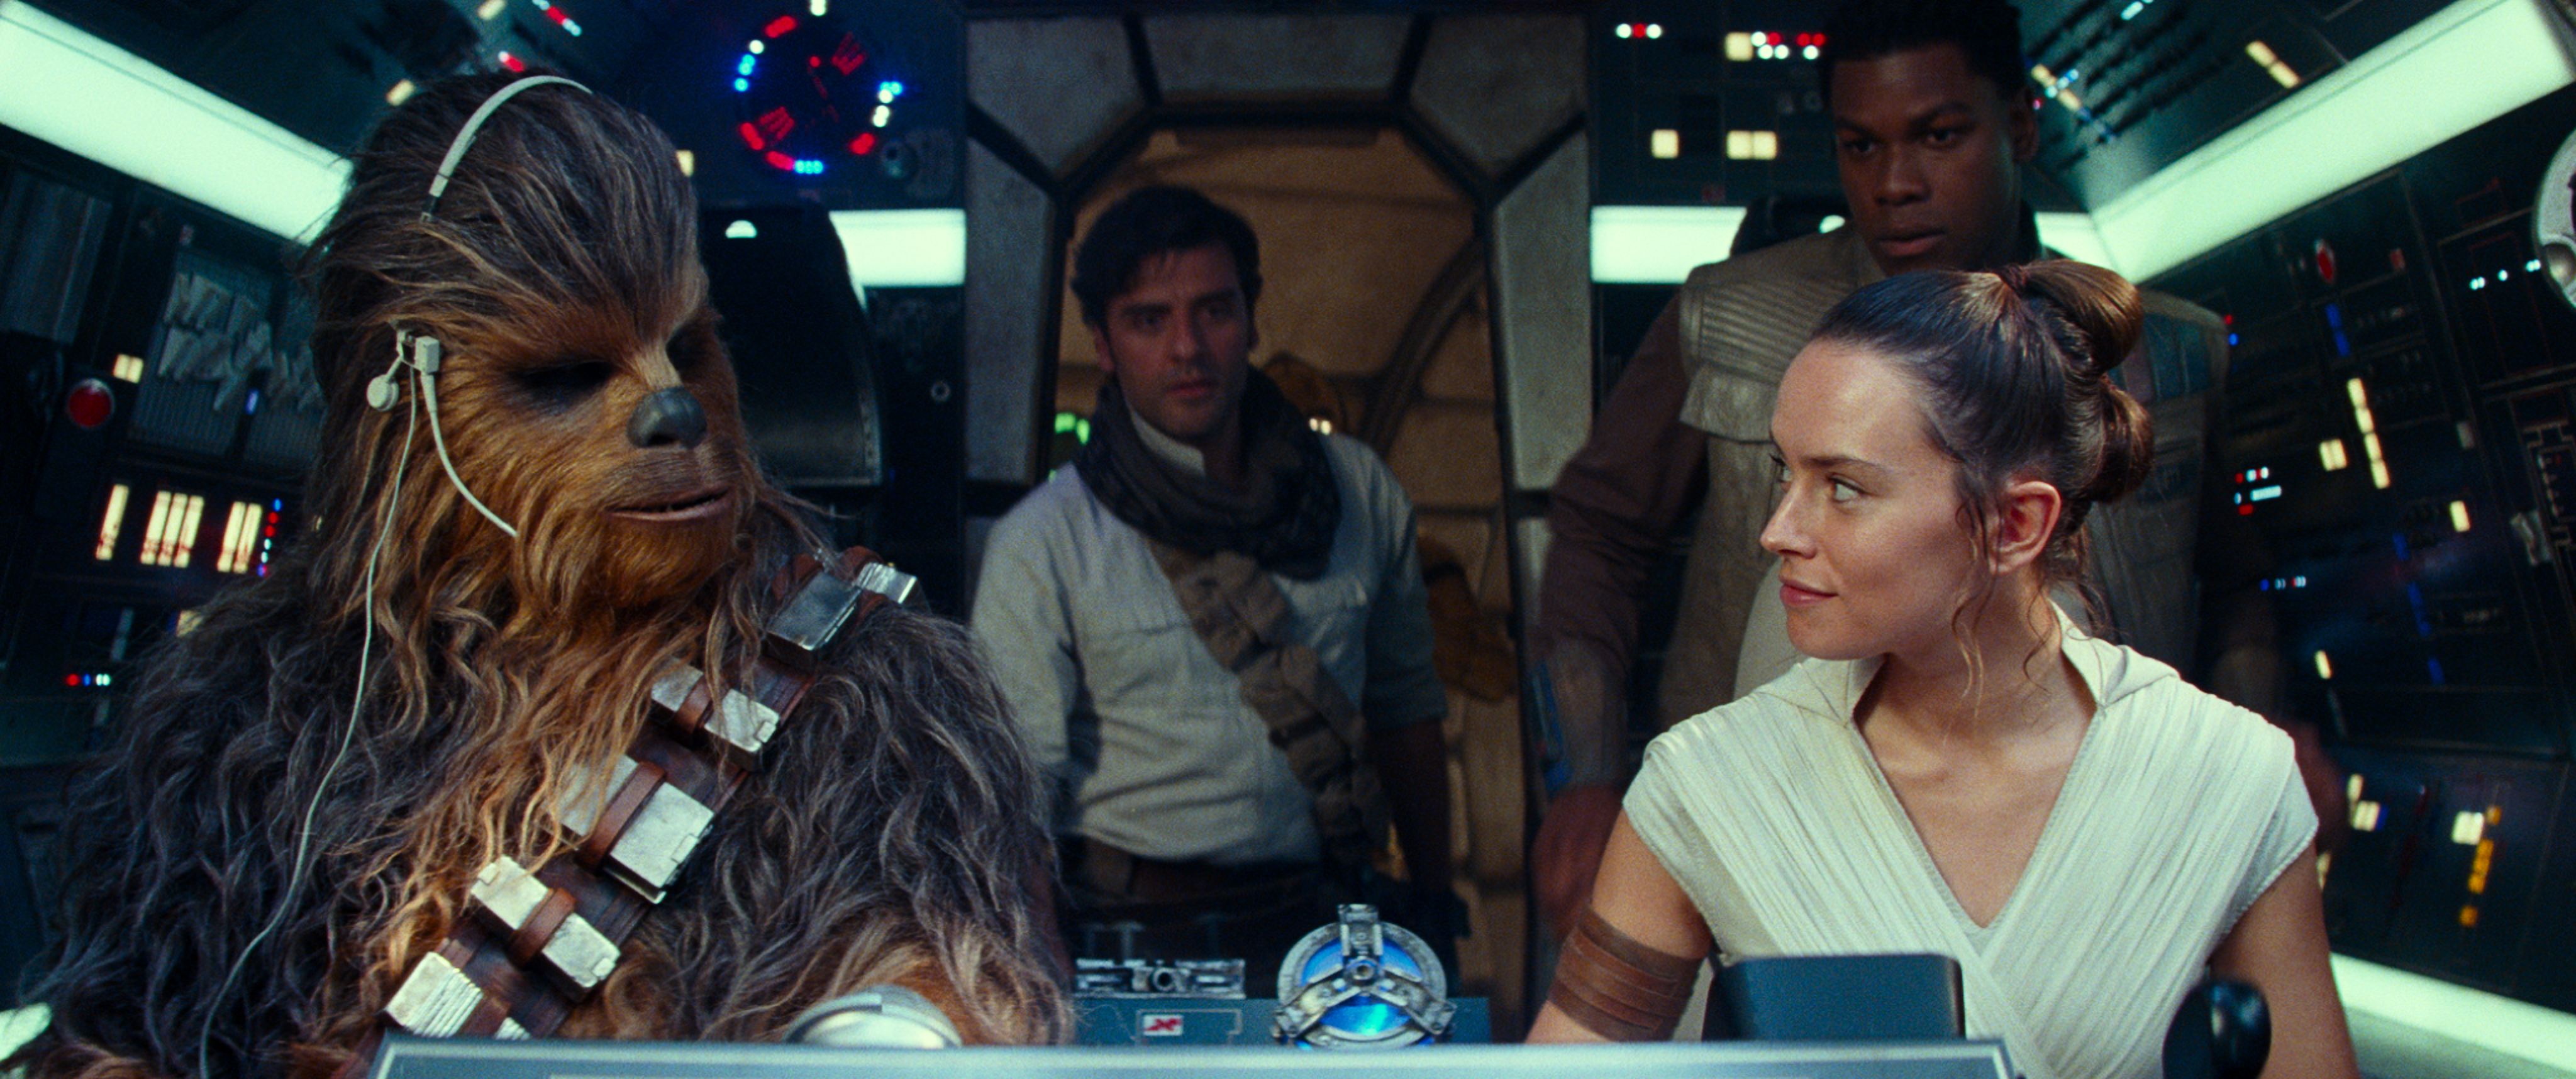 Chewbacca (Joonas Suotamo), Rey (Daisy Ridley), Finn (John Boyega) junto a Poe Dameron (Isaac) en la nave Millenium Falcon.